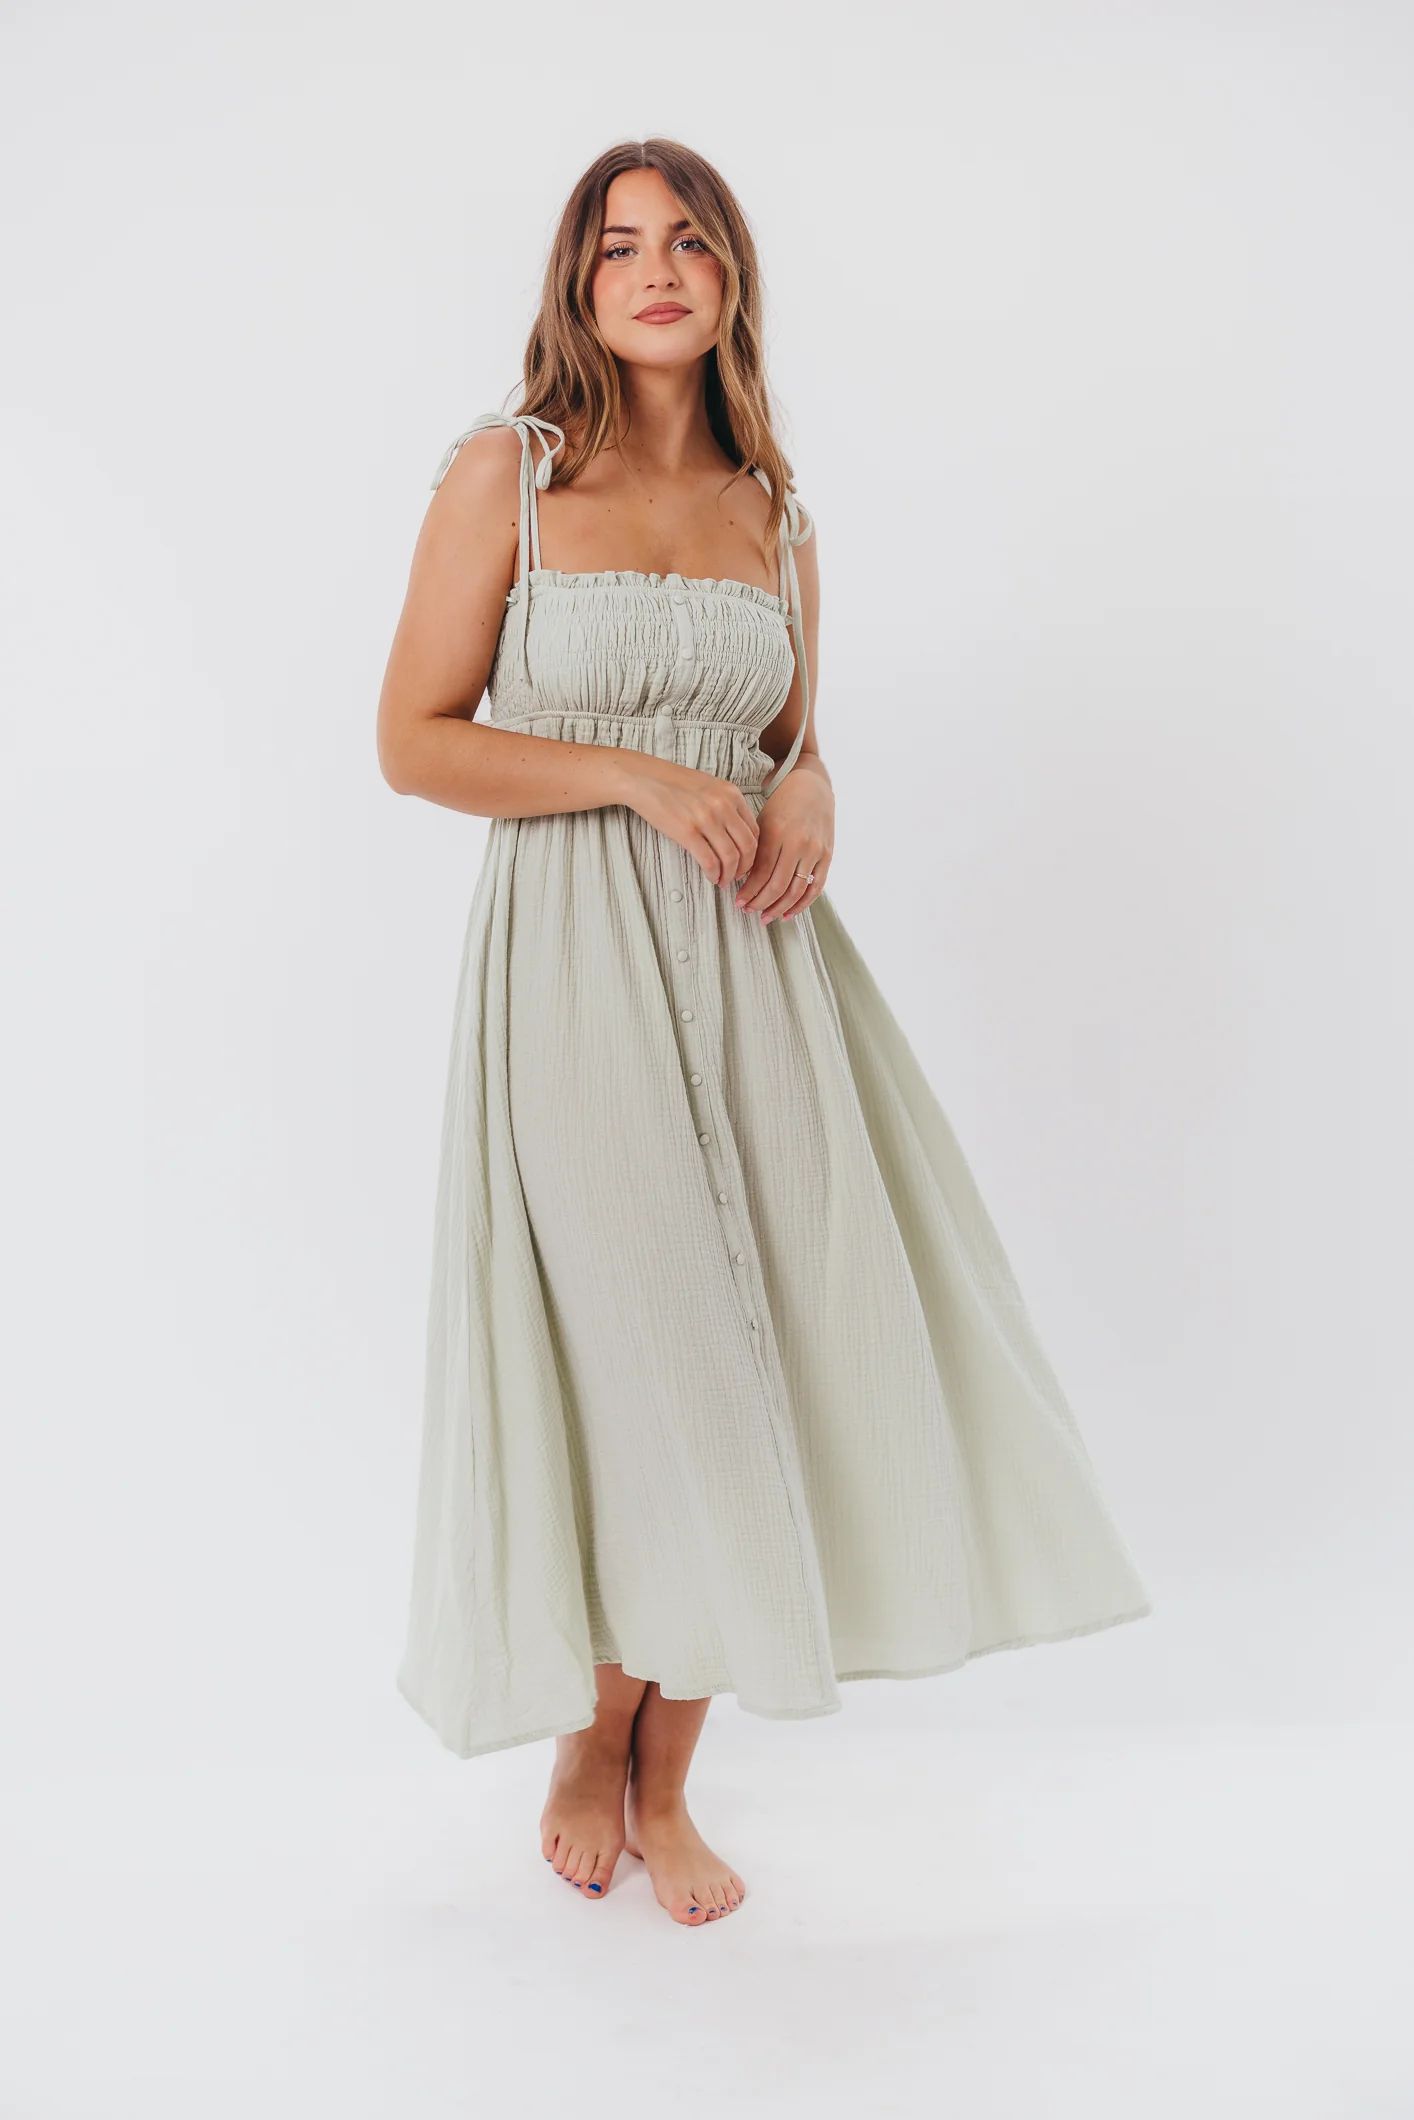 Melanie Button-Down Midi Dress in Light Mint | Worth Collective